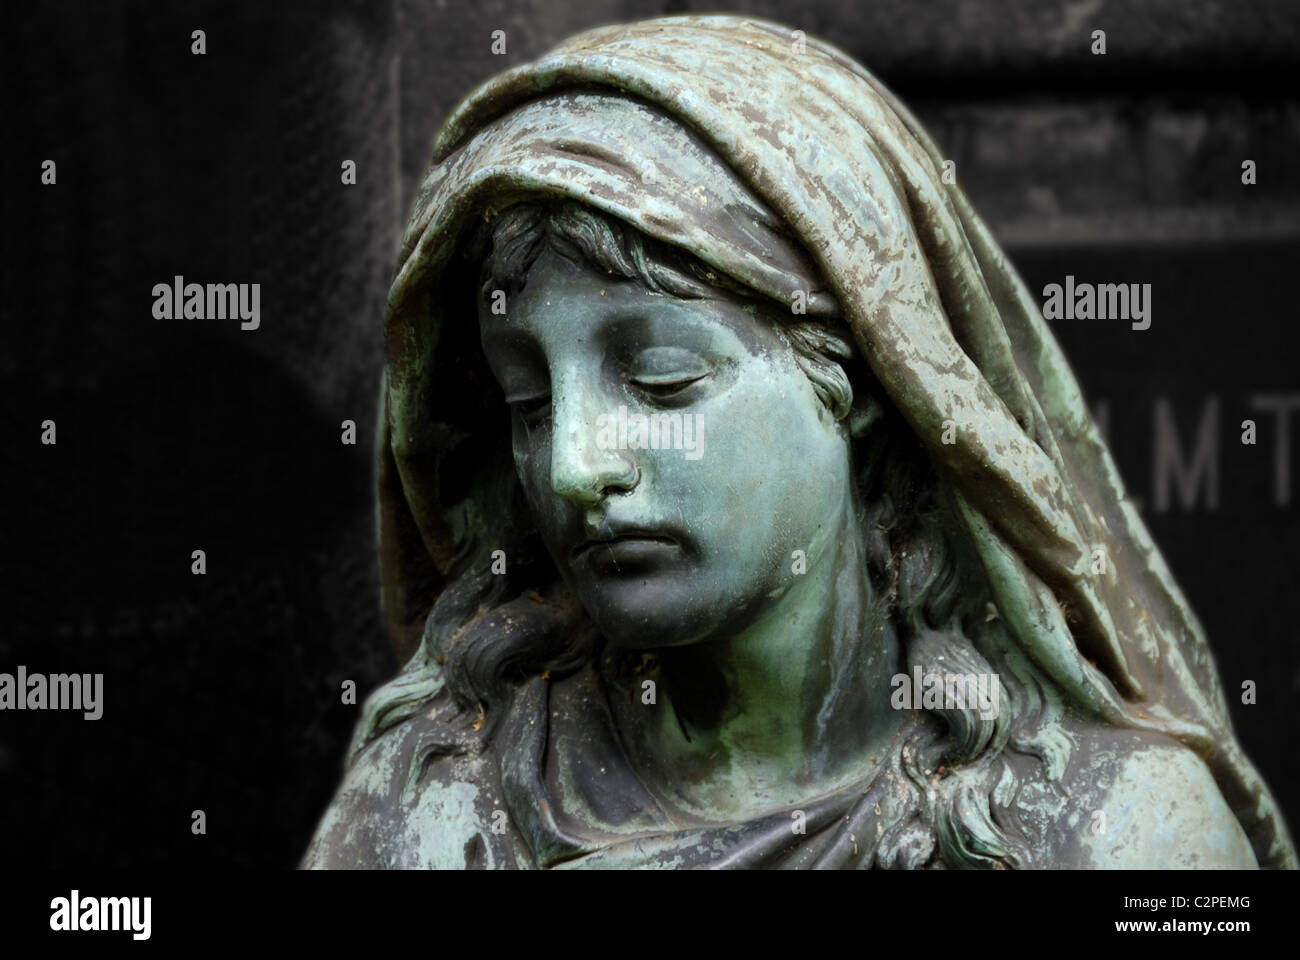 Cemetery sculpture Stock Photo